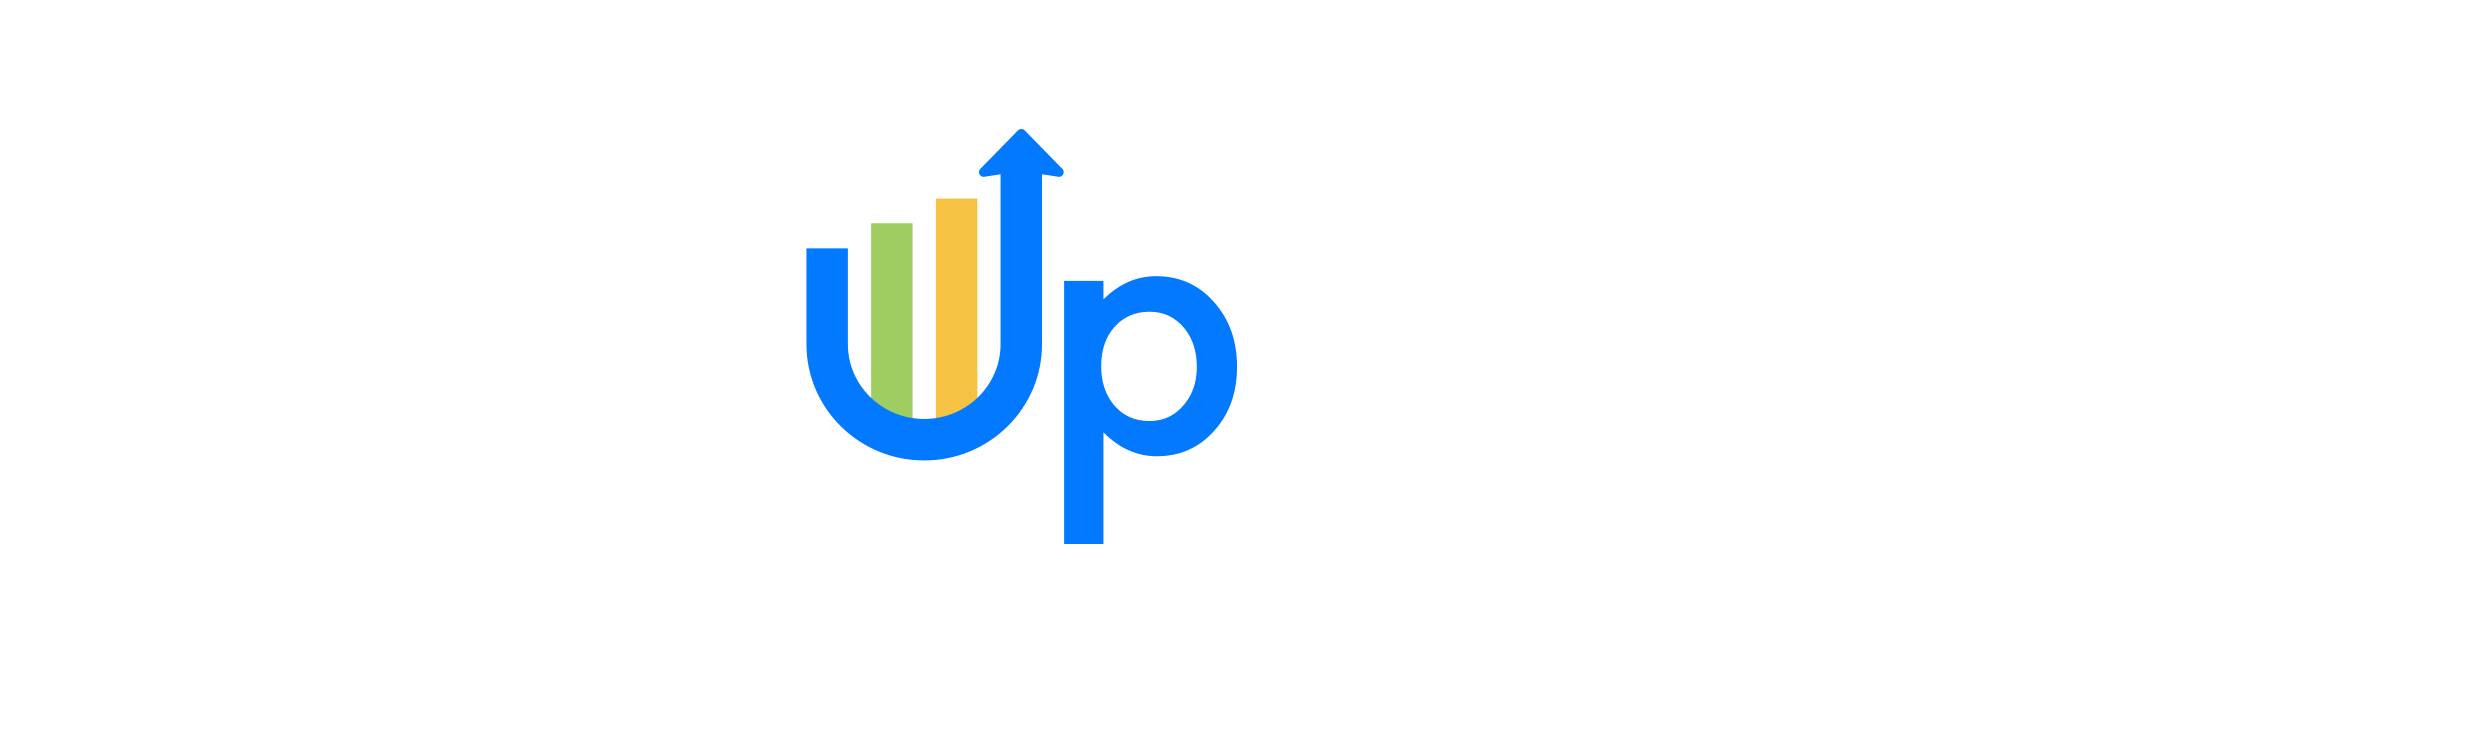 SizeUp Nassau logo